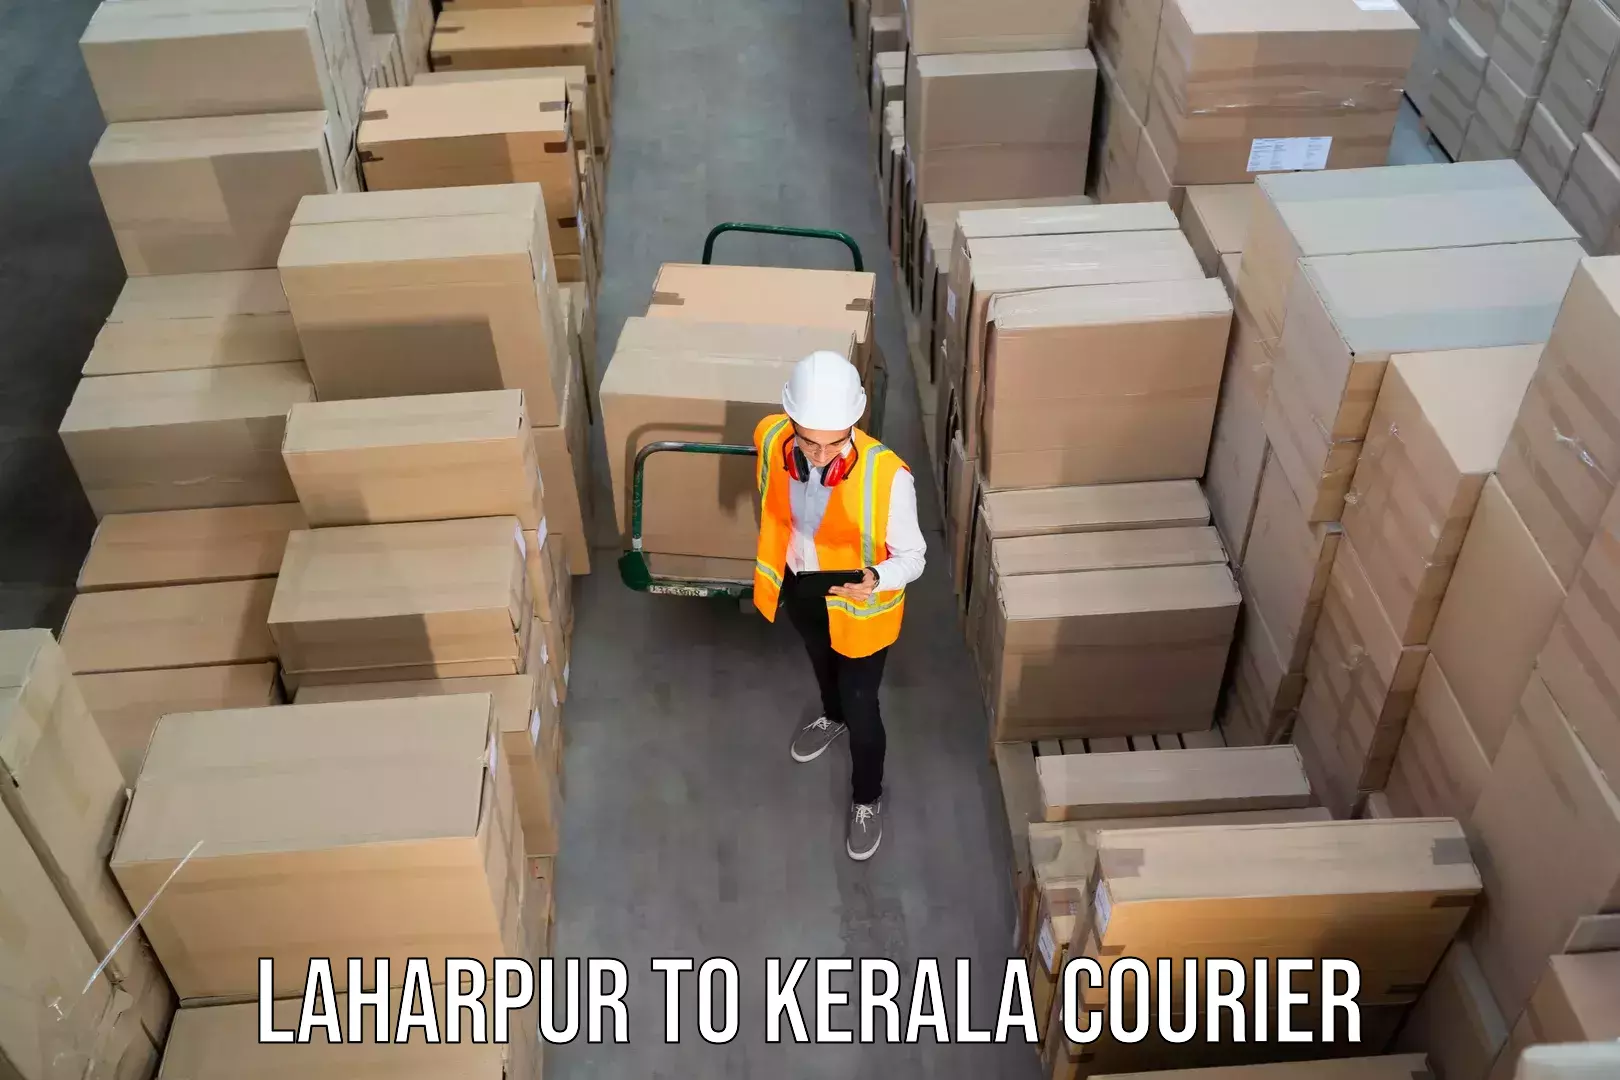 Reliable delivery network Laharpur to Vadakara